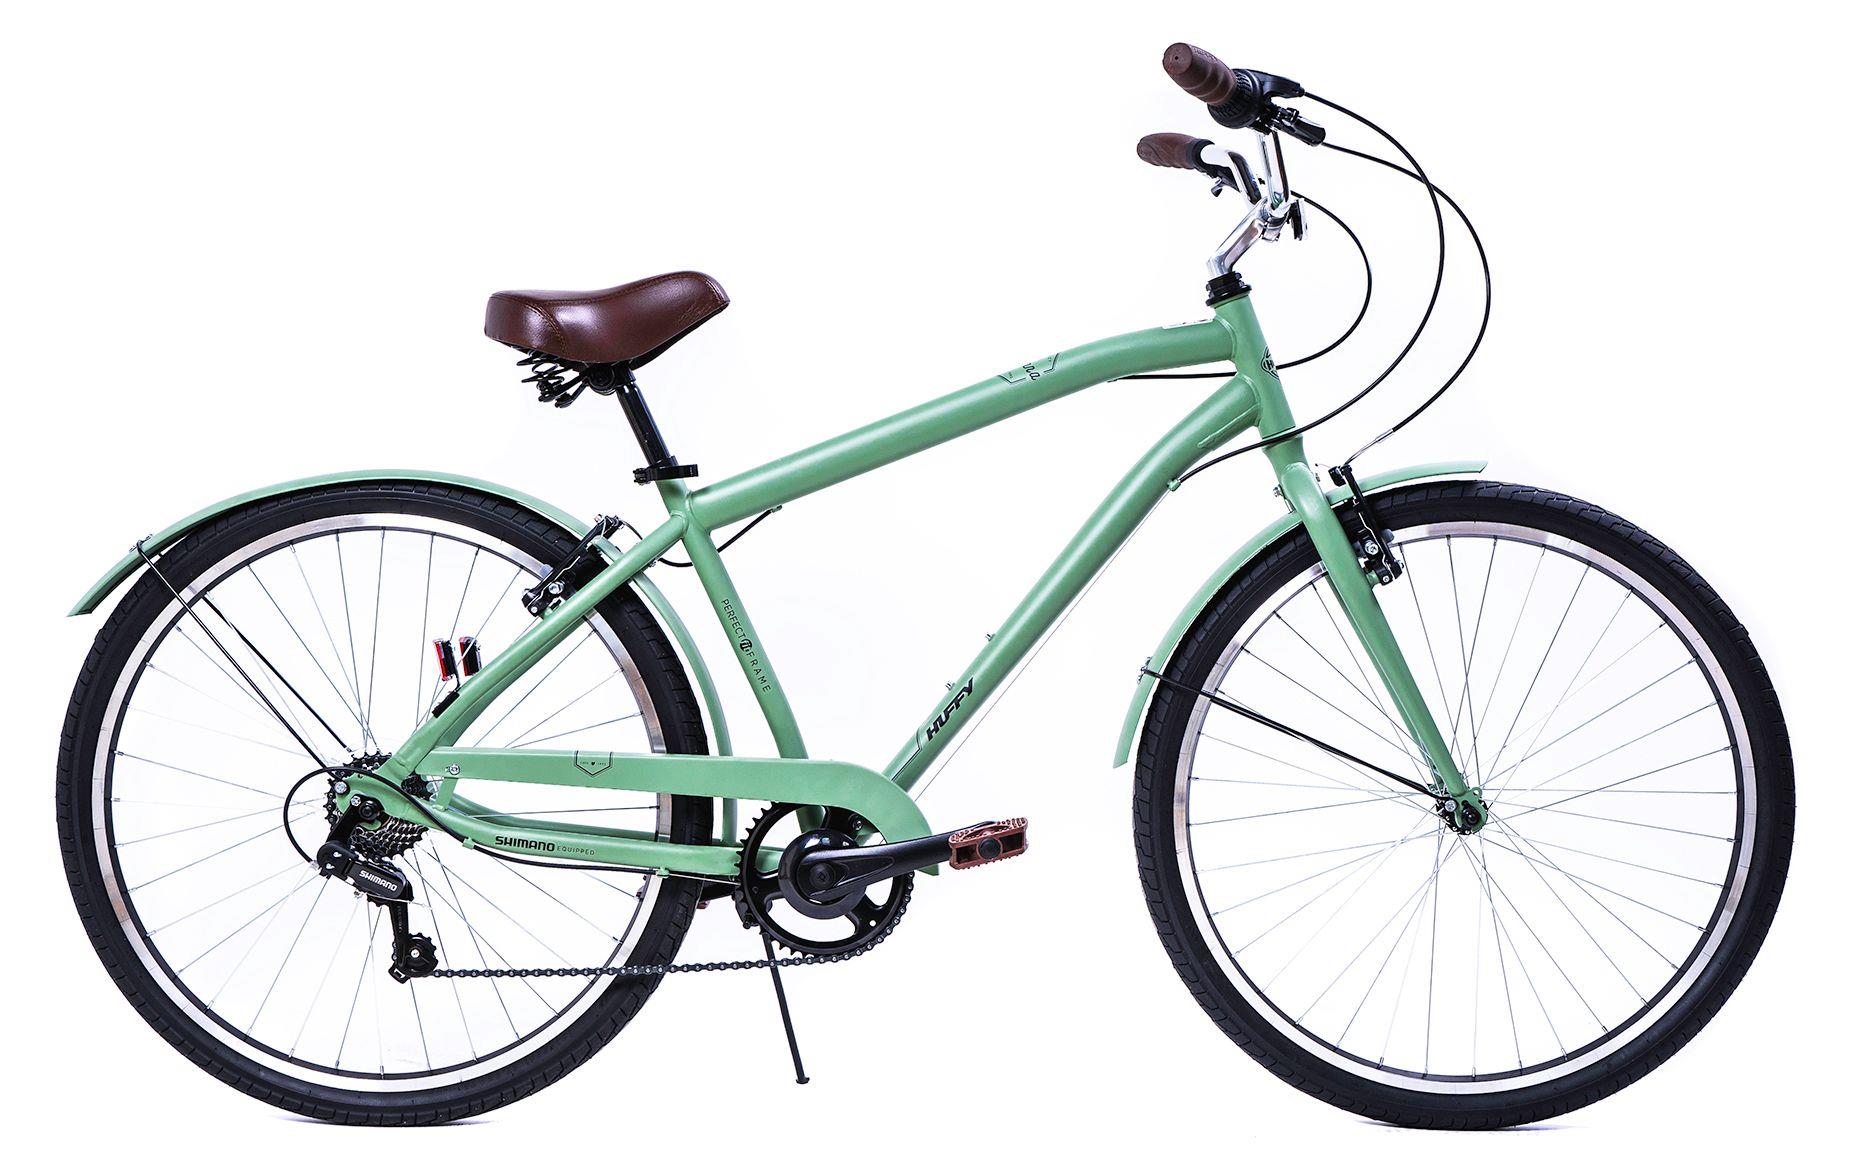 Huffy Sienna 27.5" Vintage велосипед, Shimano 7-speed index, Зеленый